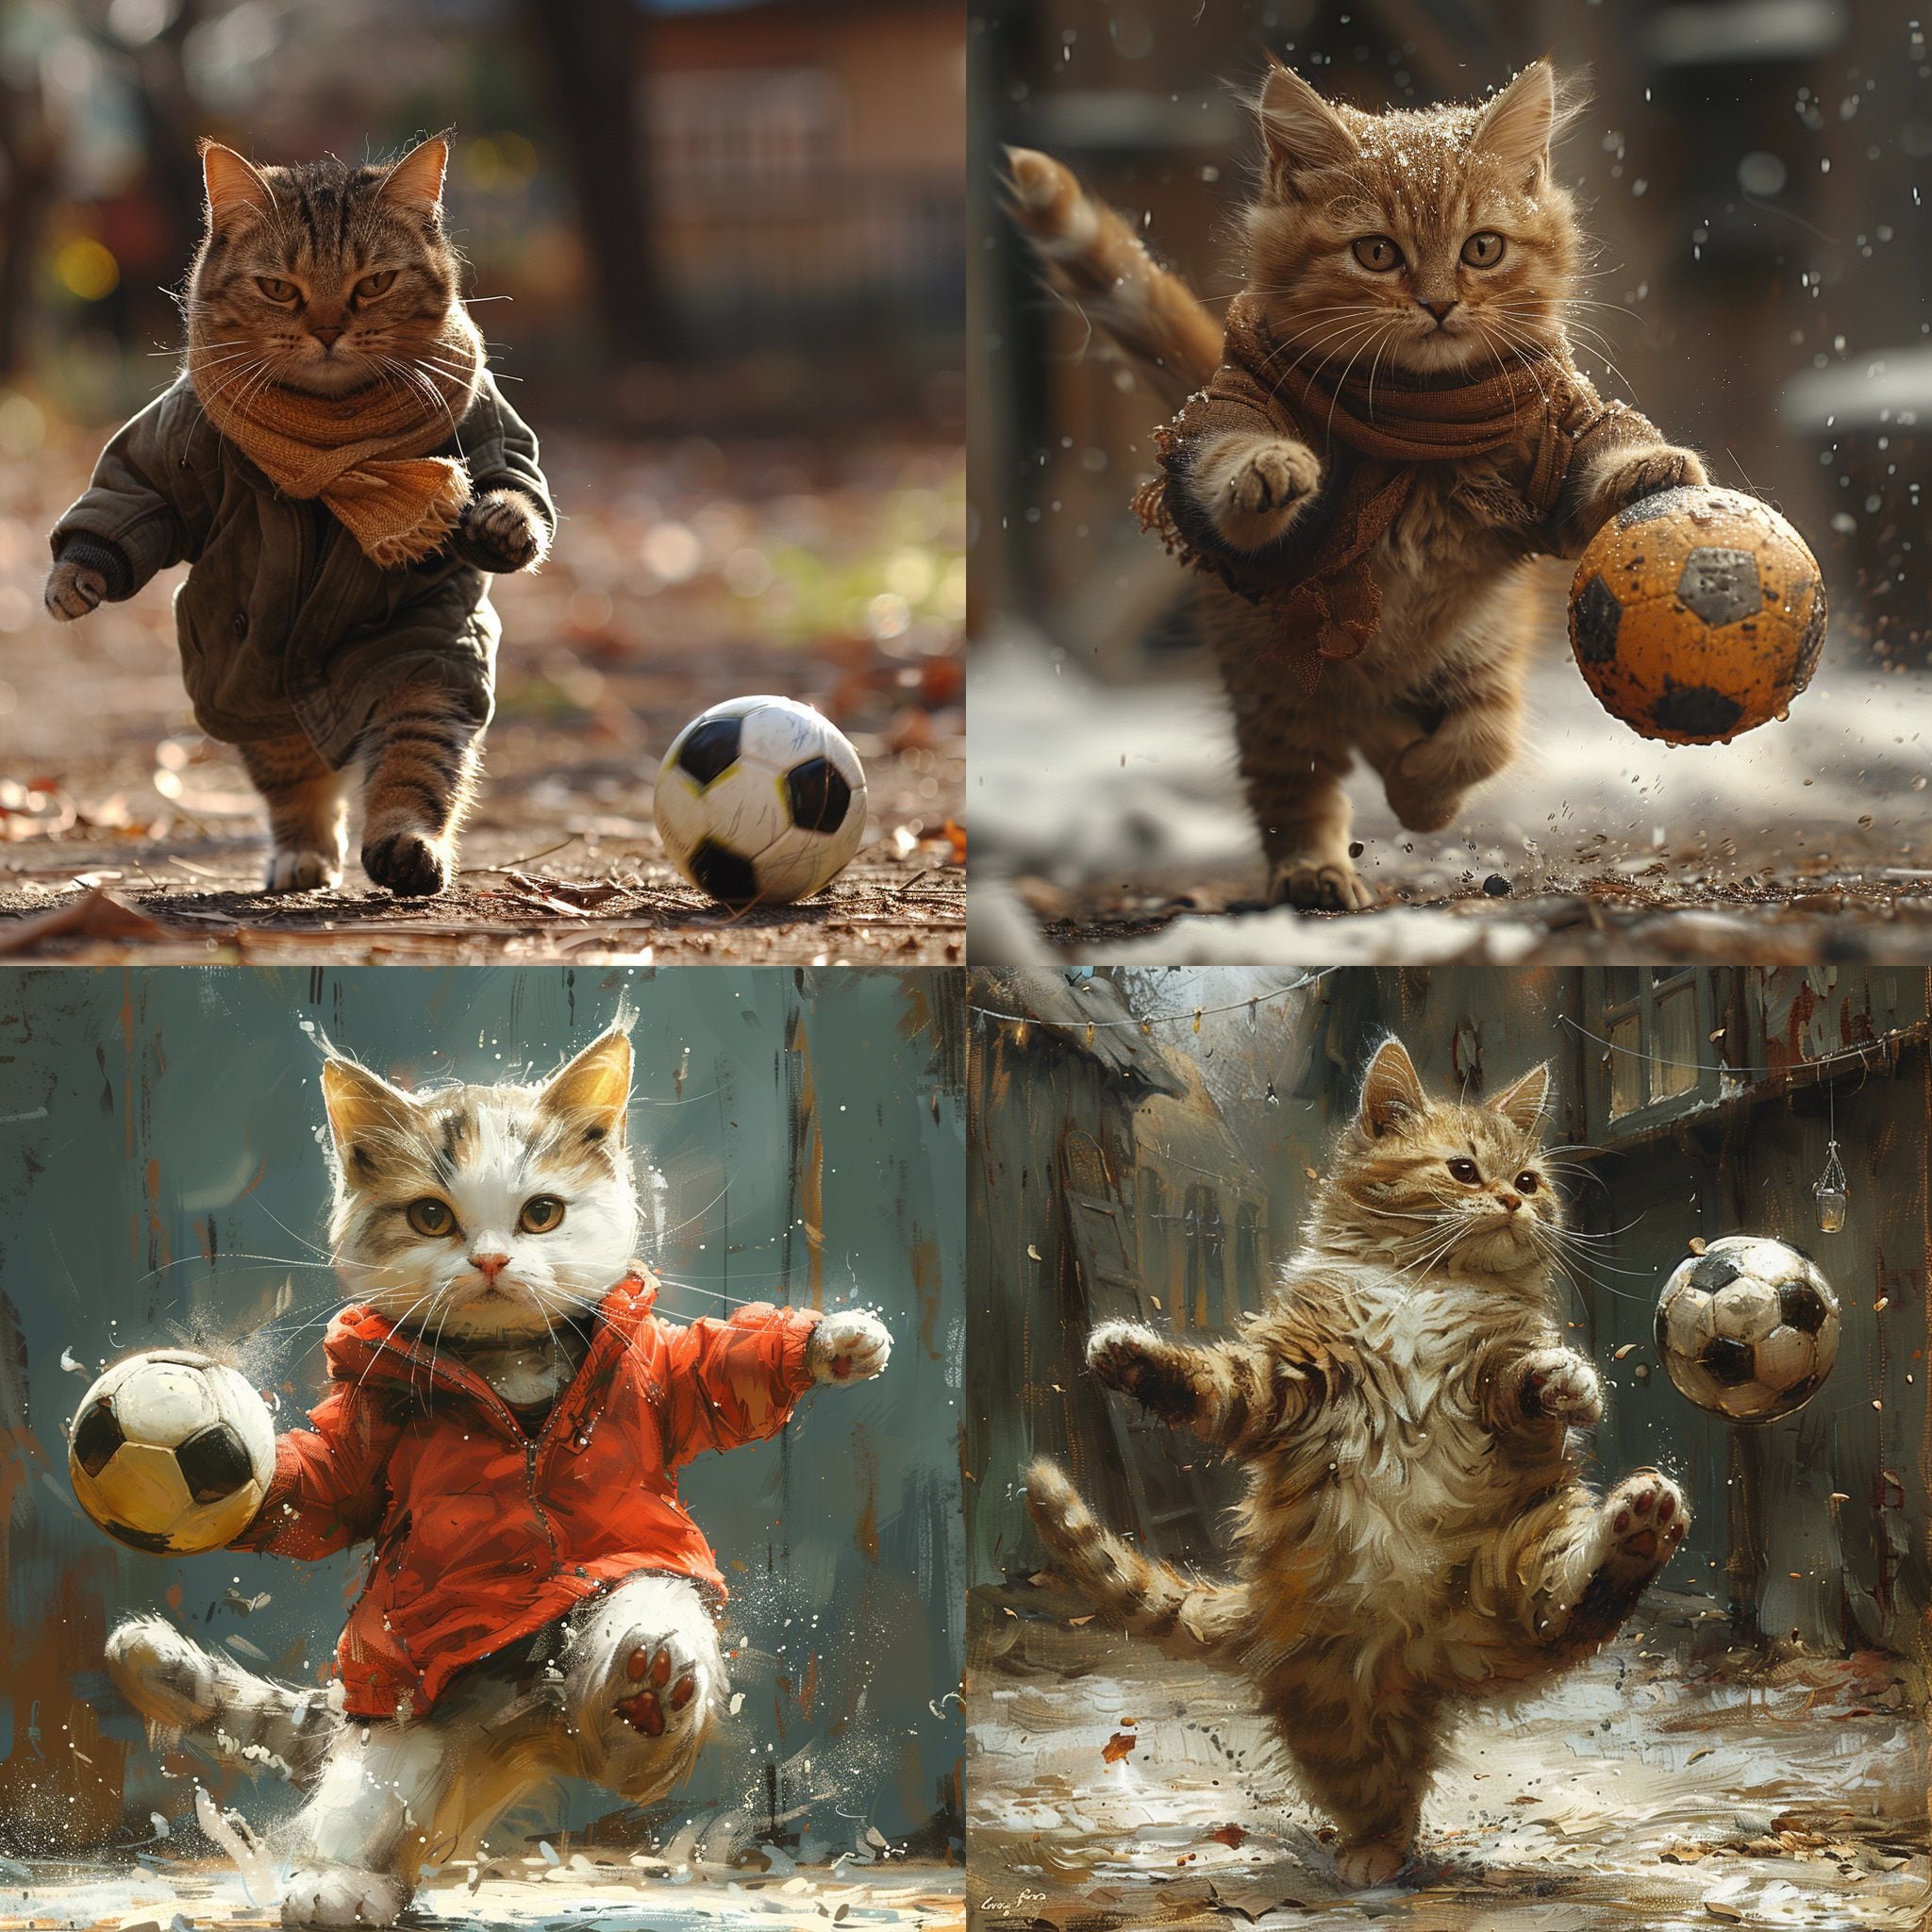 Gato futbolista según la Inteligencia Artificial de Midjourney